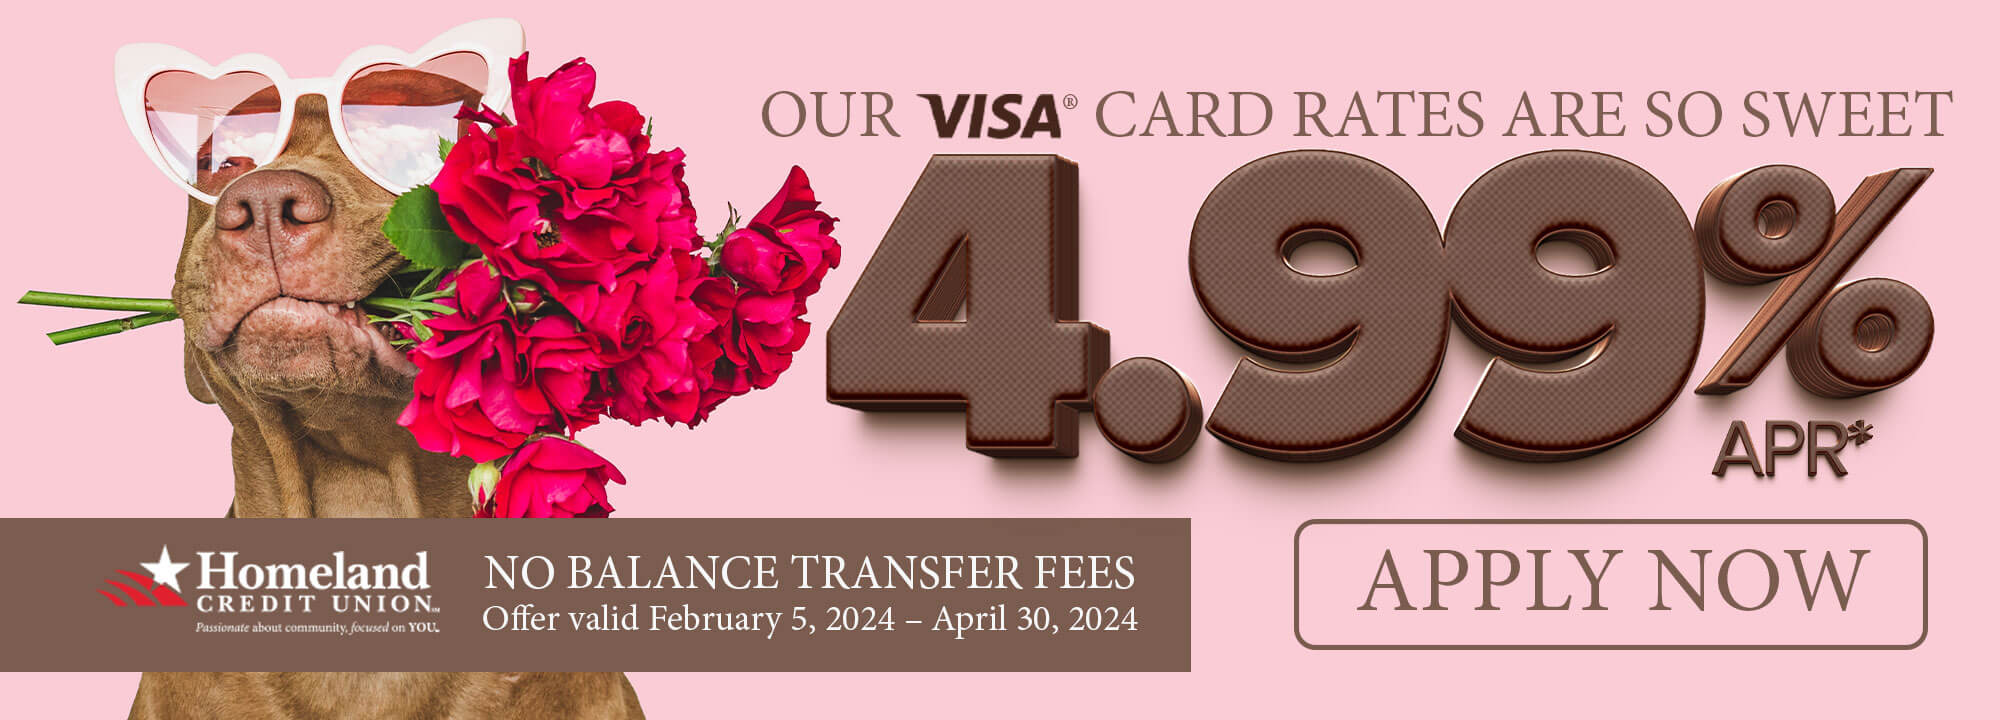 Our VisaÃƒâ€šÃ‚Â® Card Rates are so sweet. 4.99% APR* no balance transfer fees. Offer valid February 5, 2024 - April 30th, 2024. *Apply Now